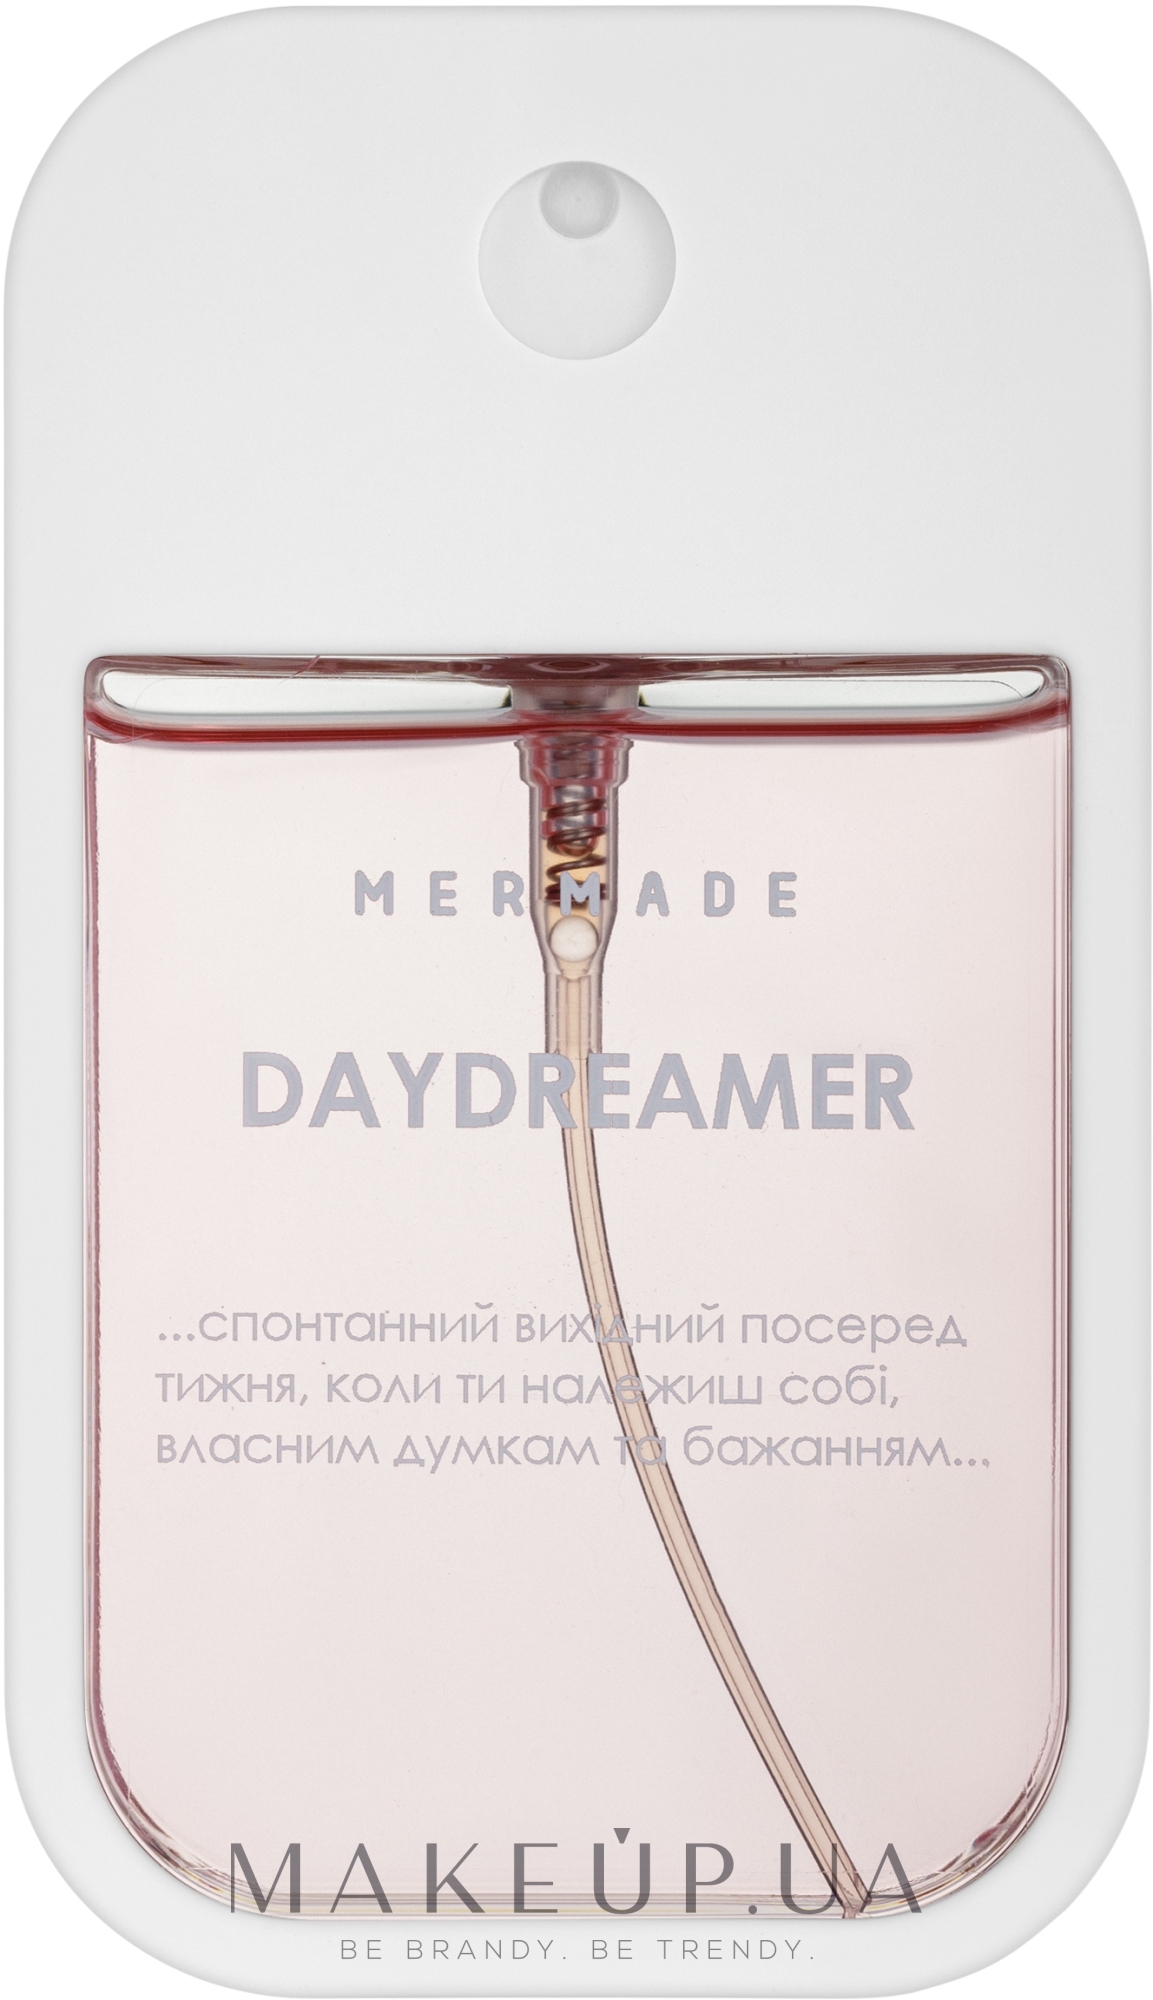 Mermade Daydreamer